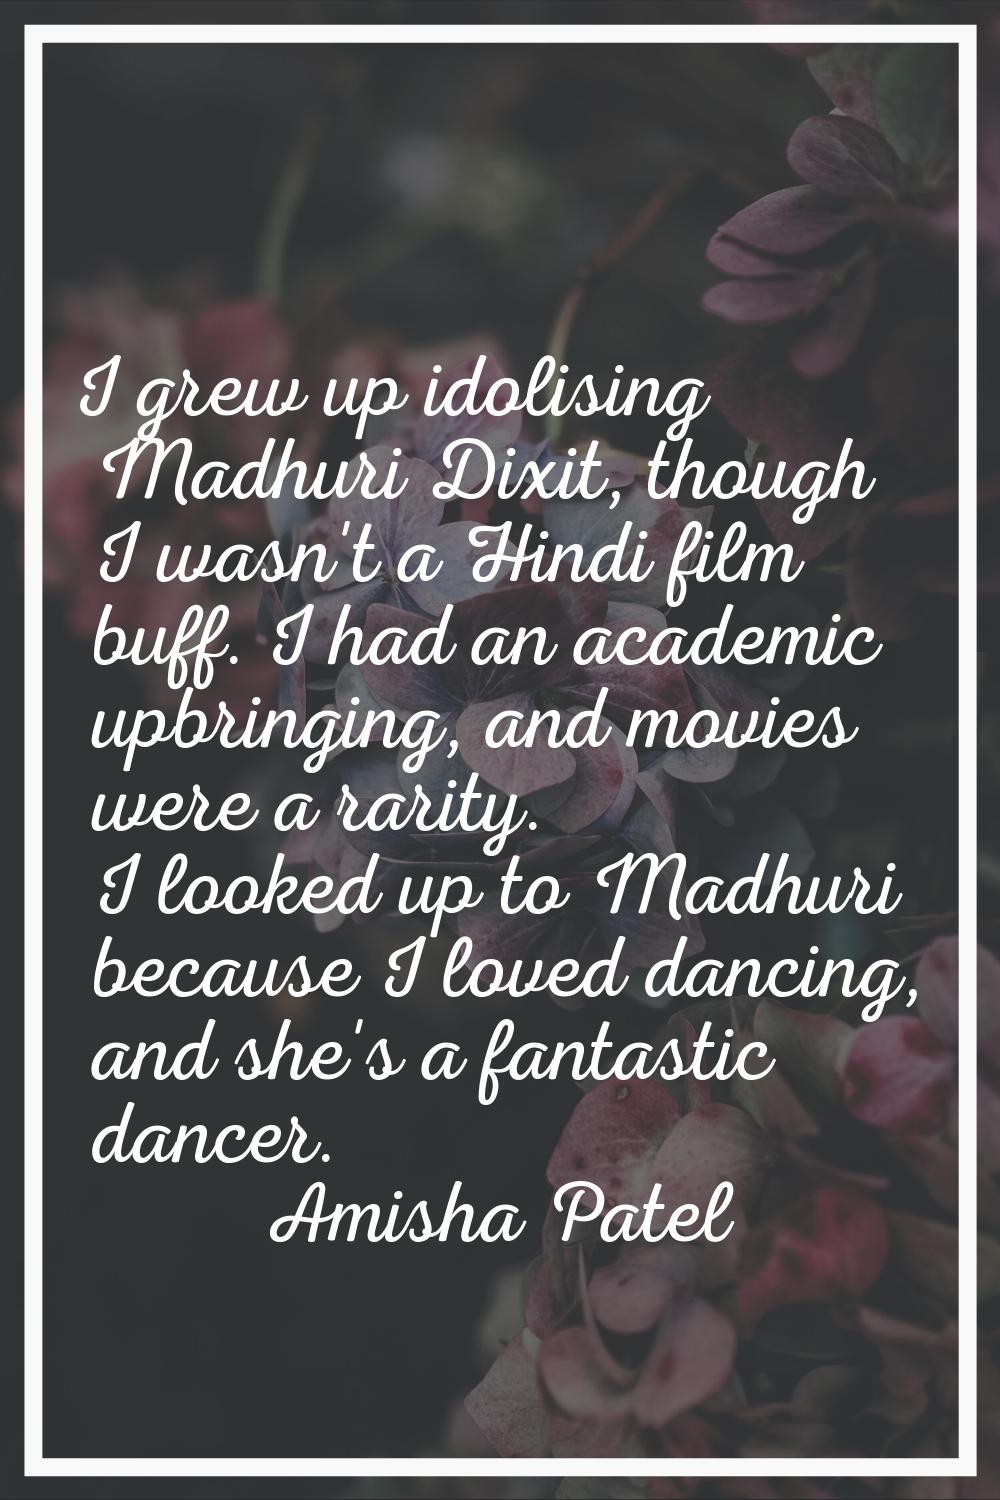 I grew up idolising Madhuri Dixit, though I wasn't a Hindi film buff. I had an academic upbringing,